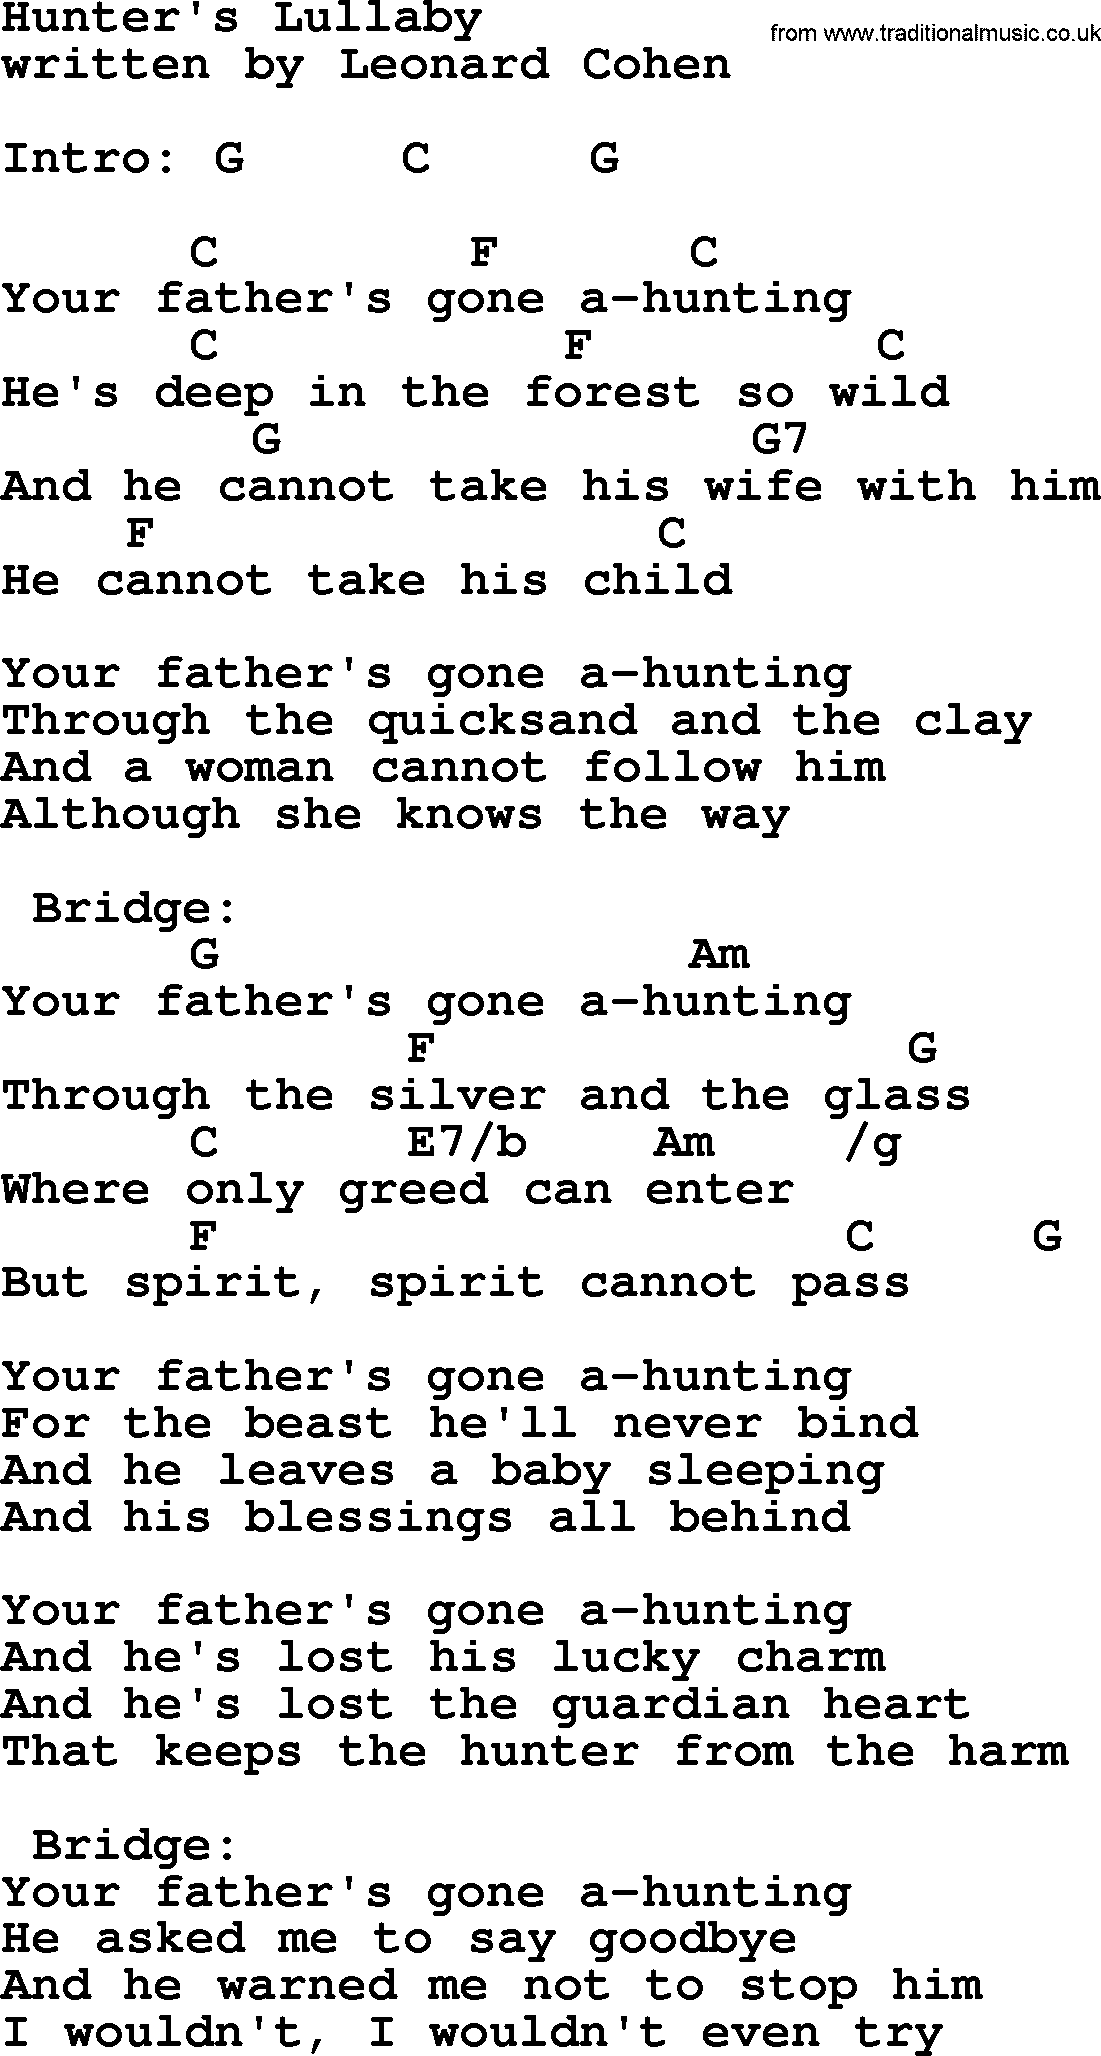 Leonard Cohen song Hunters Lullaby, lyrics and chords